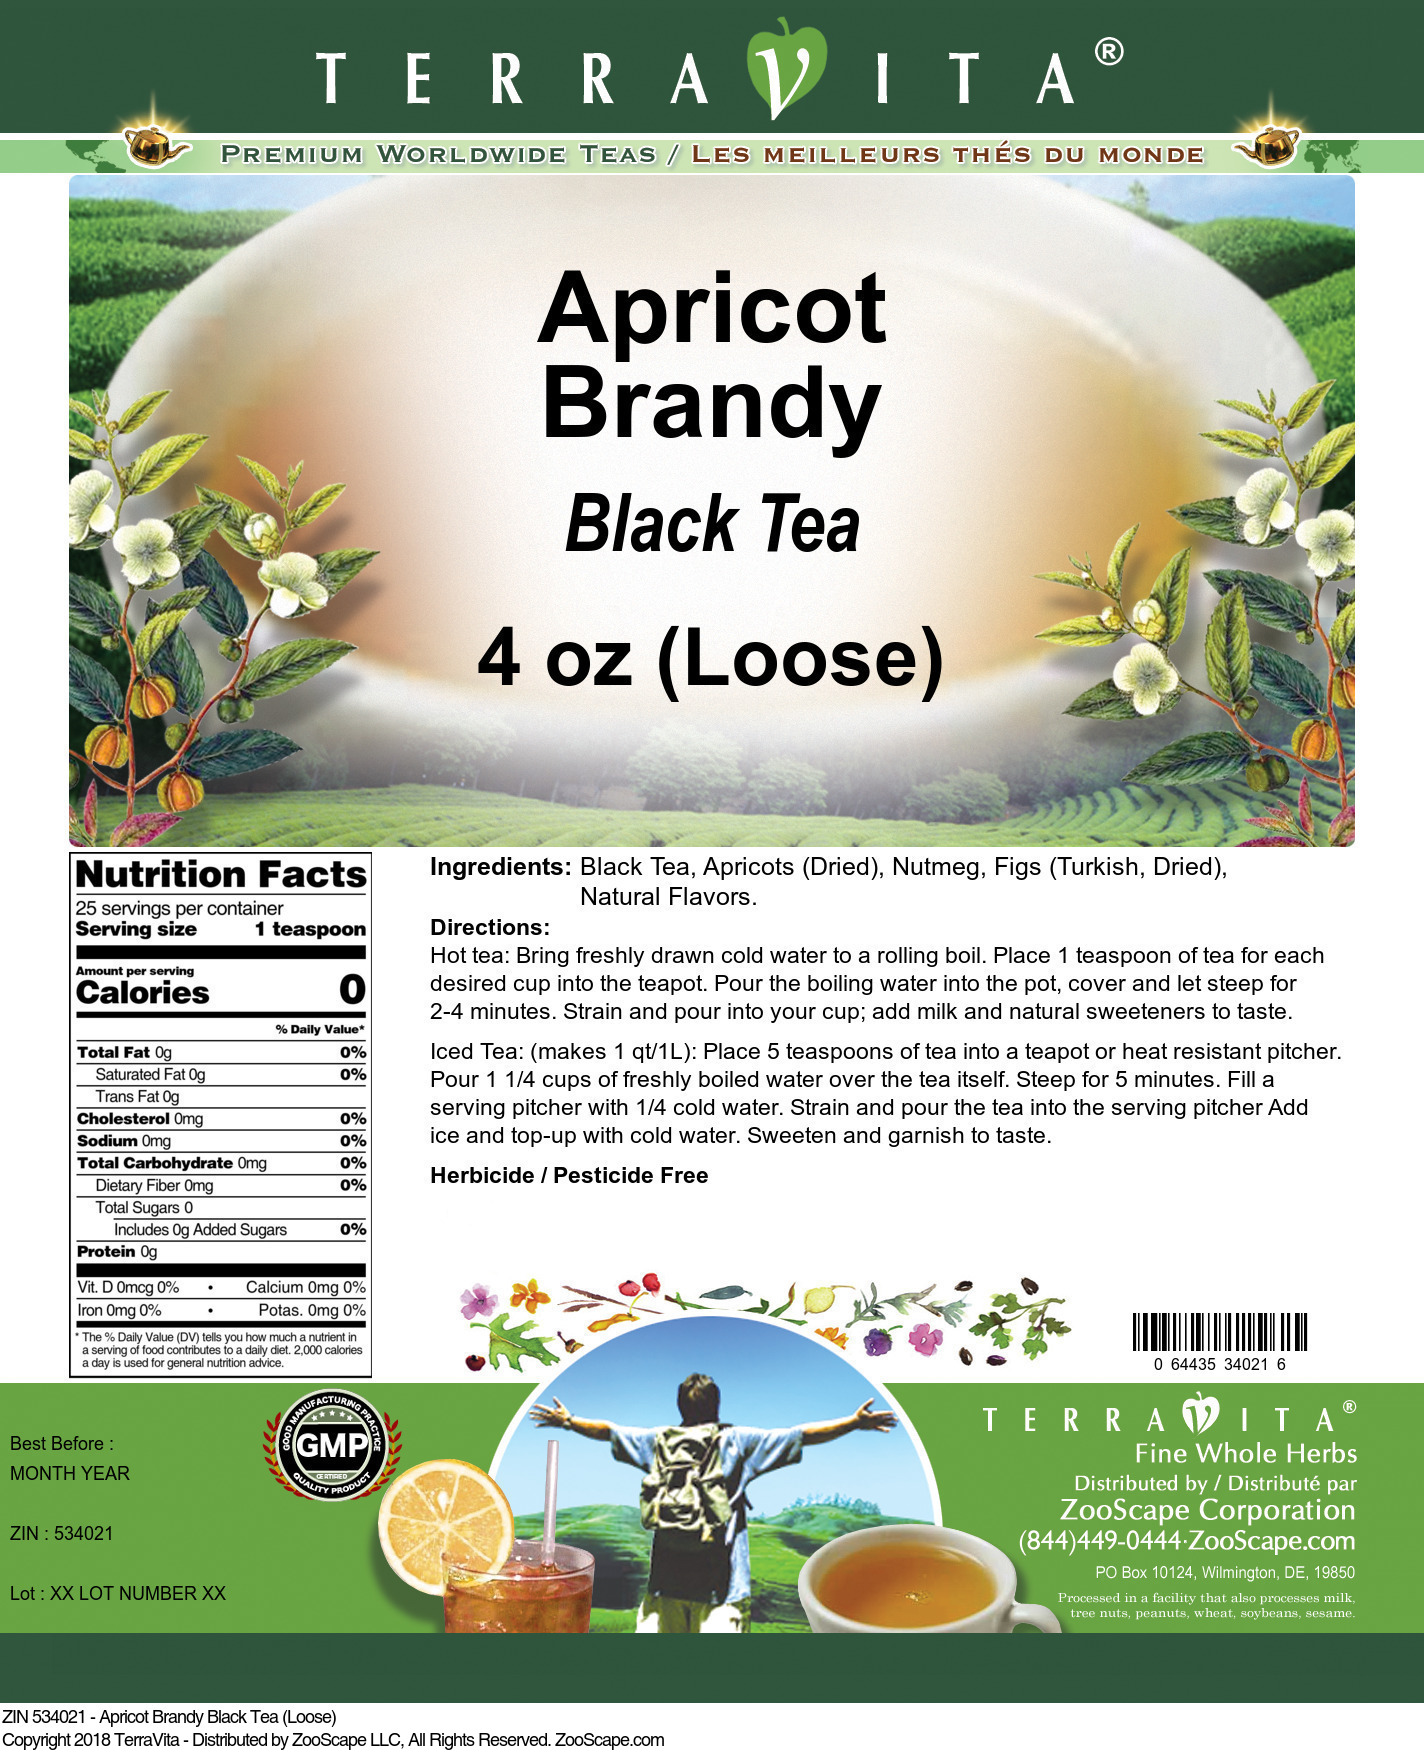 Apricot Brandy Black Tea (Loose) - Label